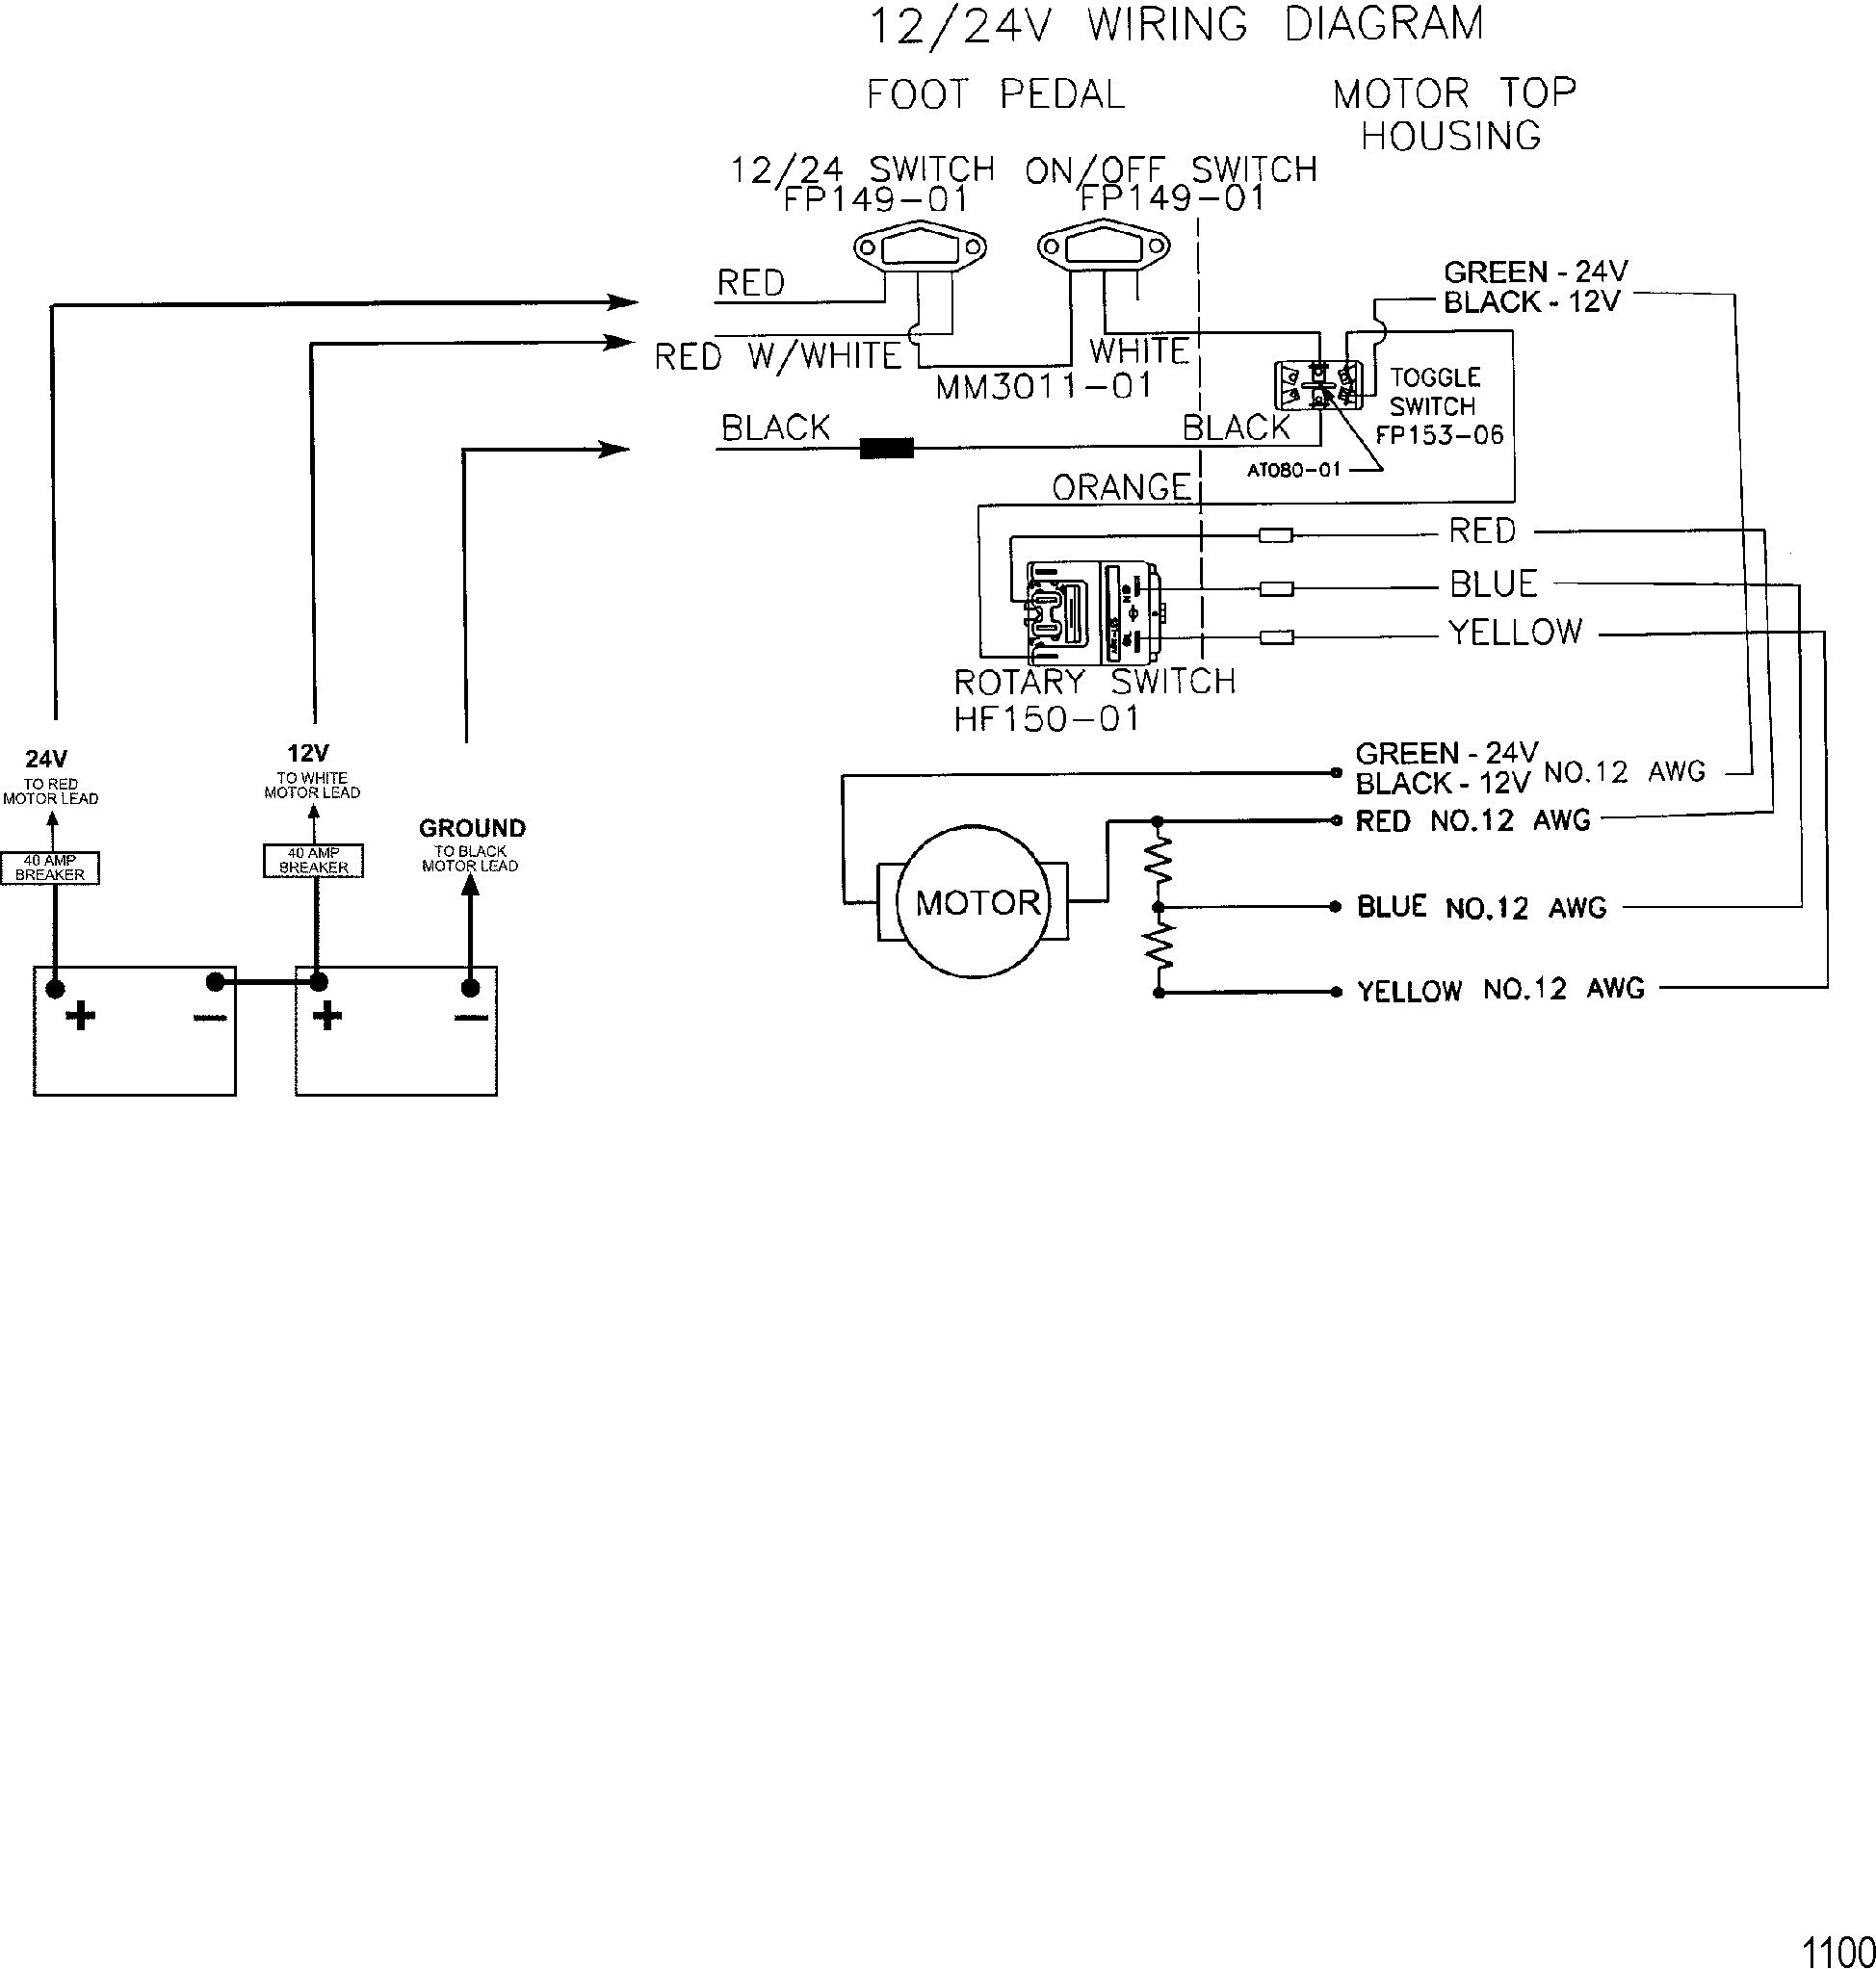 Beauteous 12V Trolling Motor Wiring Diagram 03 Chevy Yruck Is Like - 12V Trolling Motor Wiring Diagram